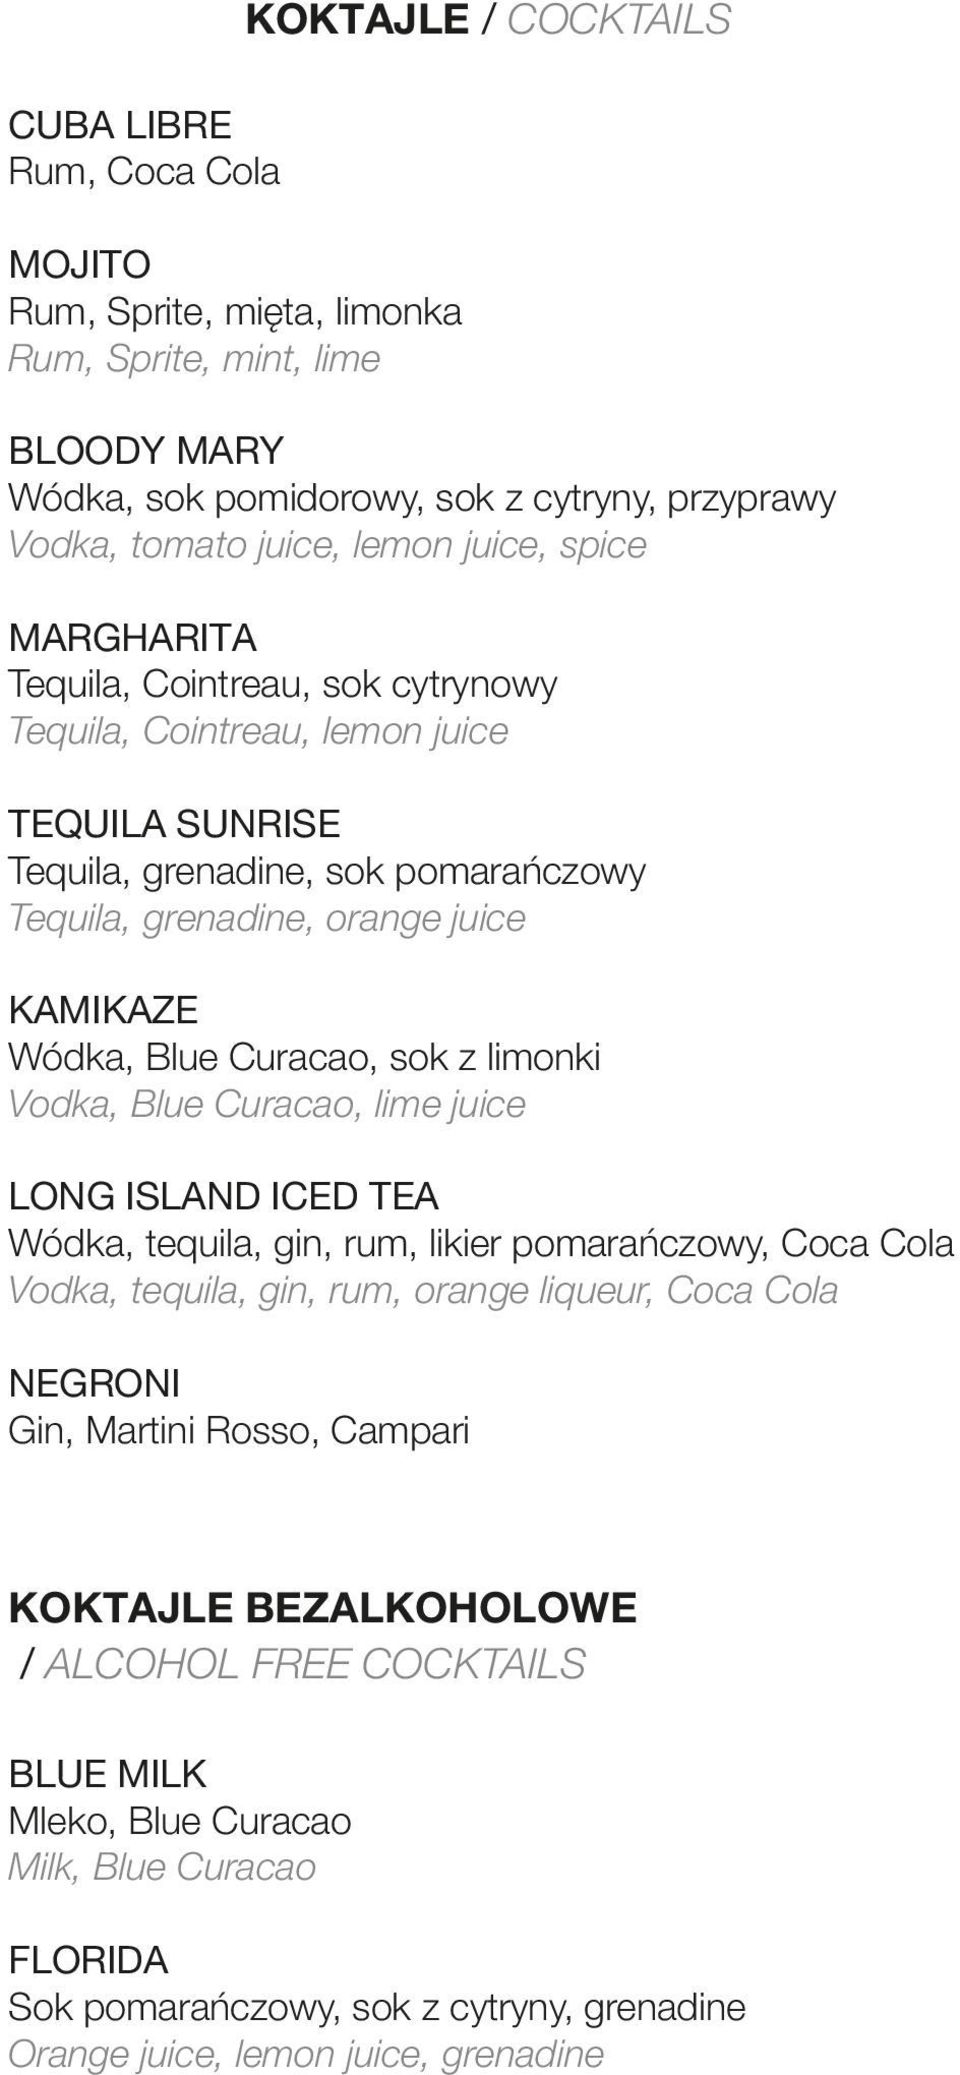 Vodka, Blue Curacao, lime juice LONG ISLAND ICED TEA Wódka, tequila, gin, rum, likier pomarańczowy, Coca Cola Vodka, tequila, gin, rum, orange liqueur, Coca Cola NEGRONI Gin, Martini Rosso, Campari